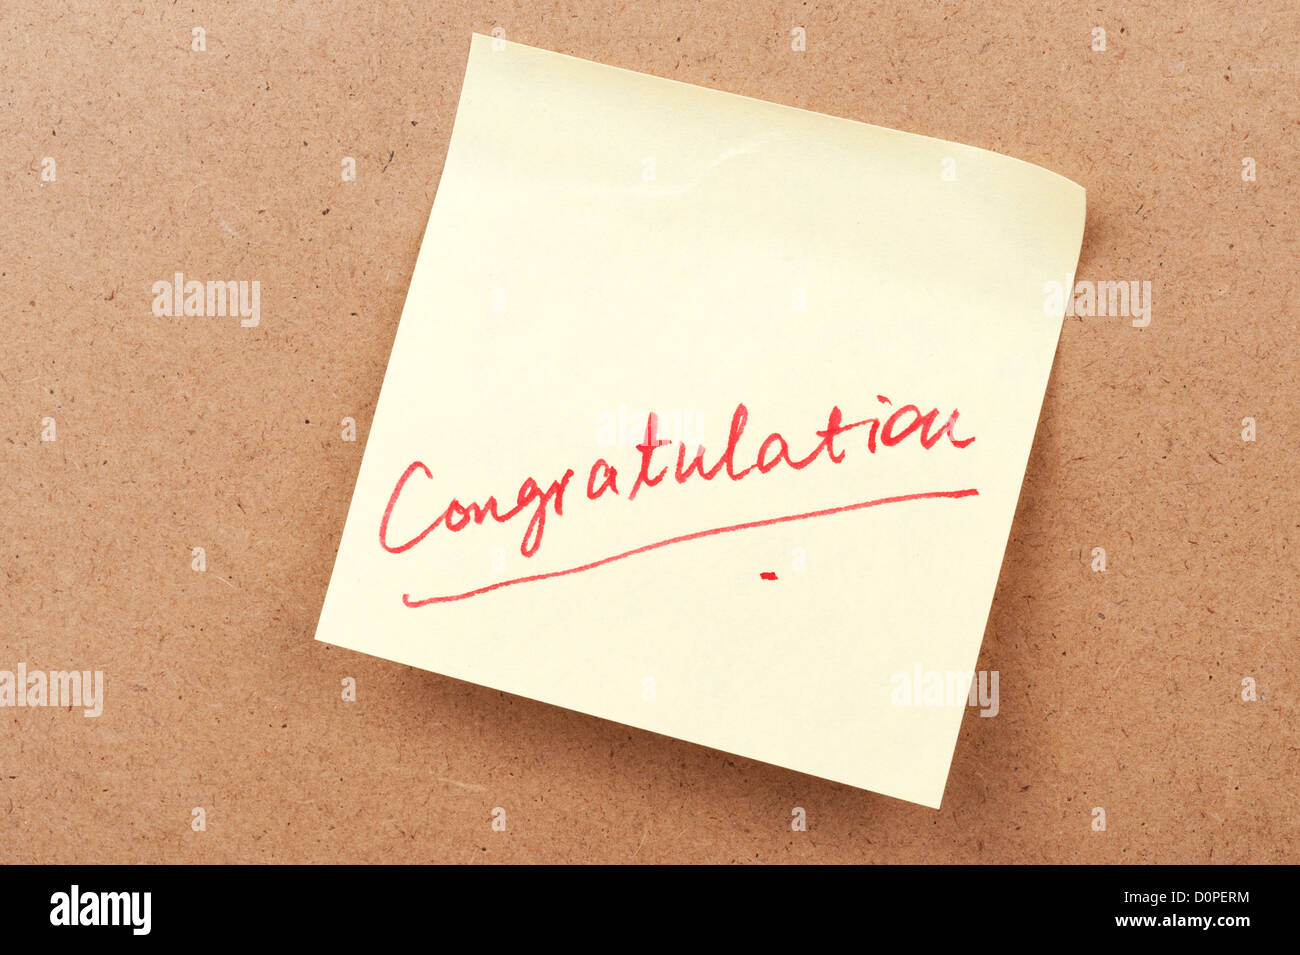 Congratulation word written on sticky note Stock Photo